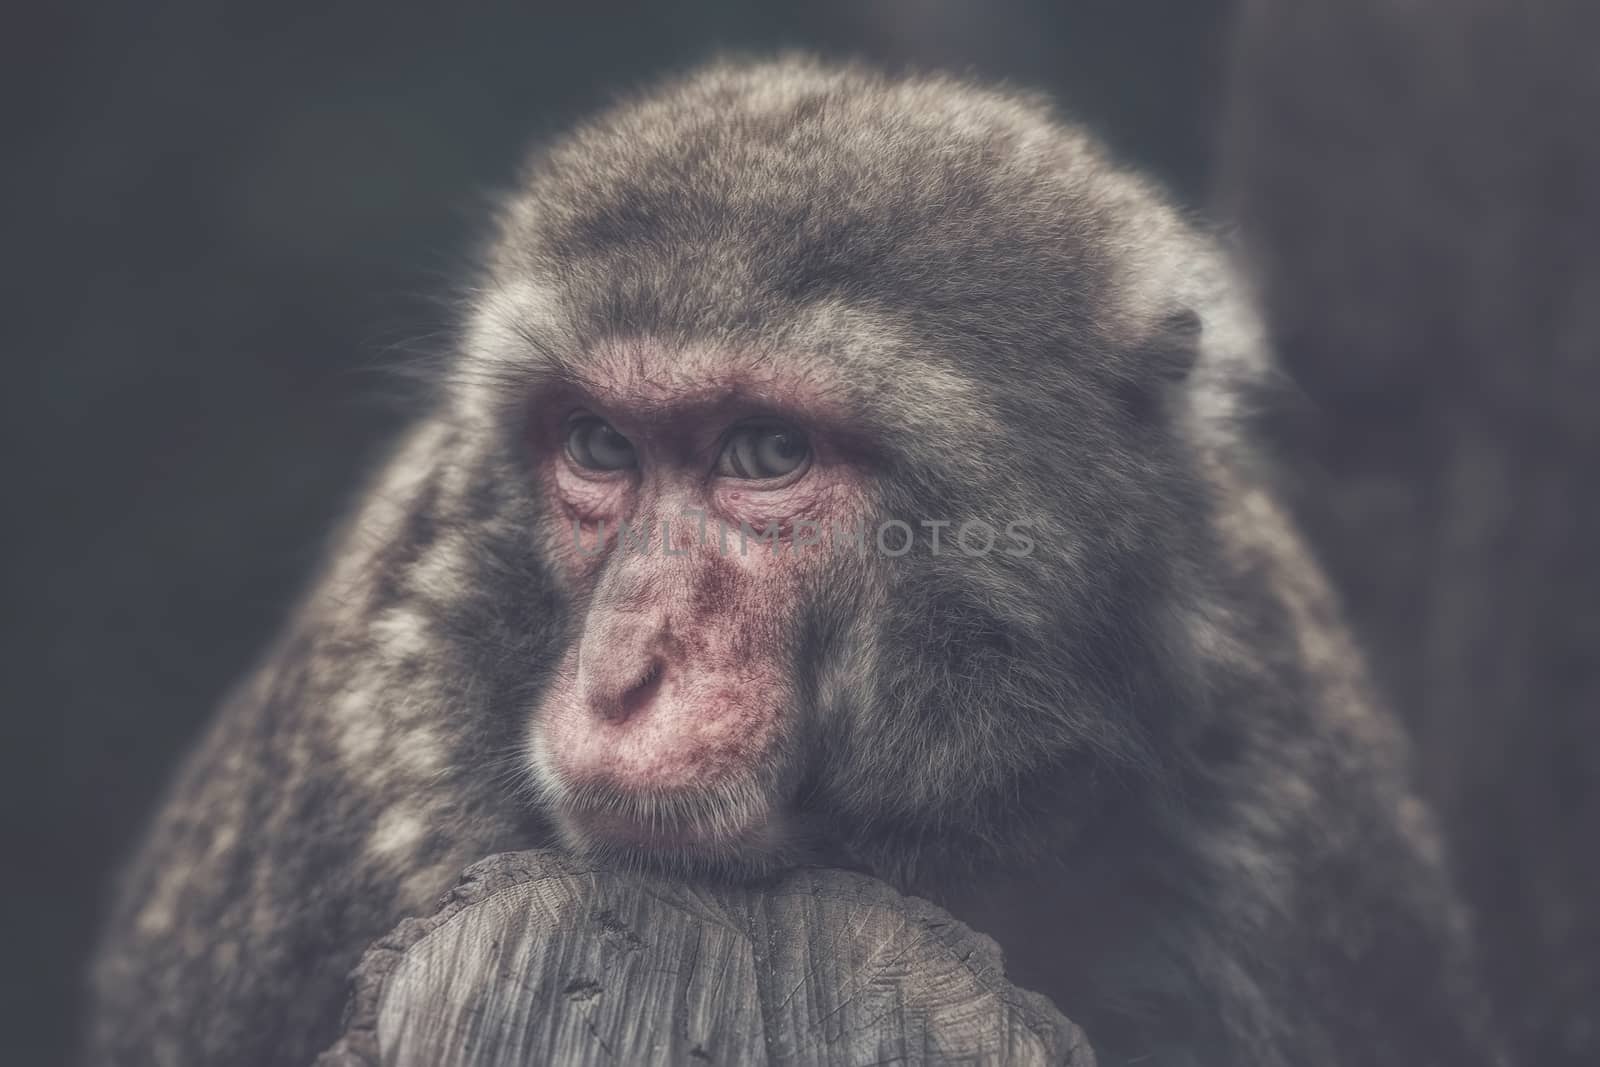 A monkey looking sad into the camera